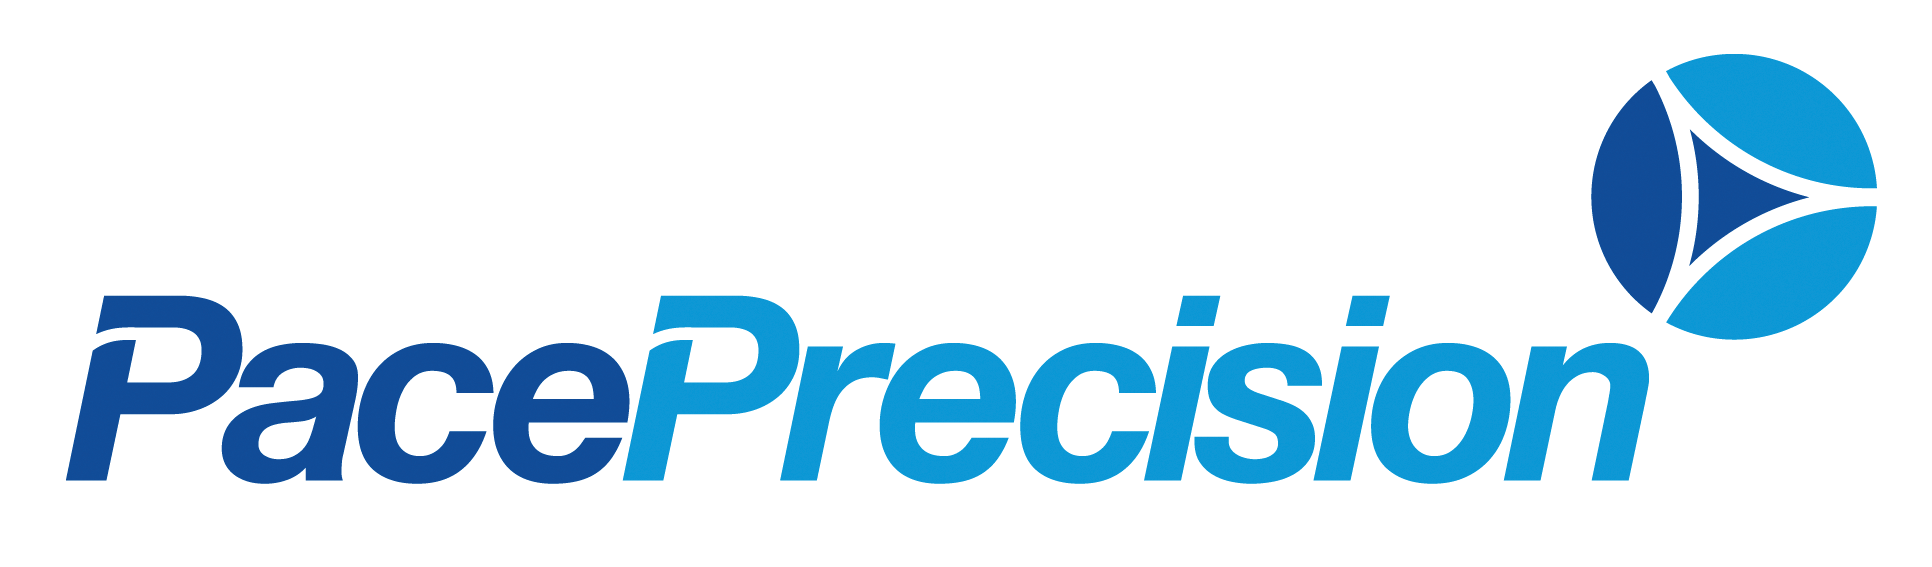 Pace Precision Ltd